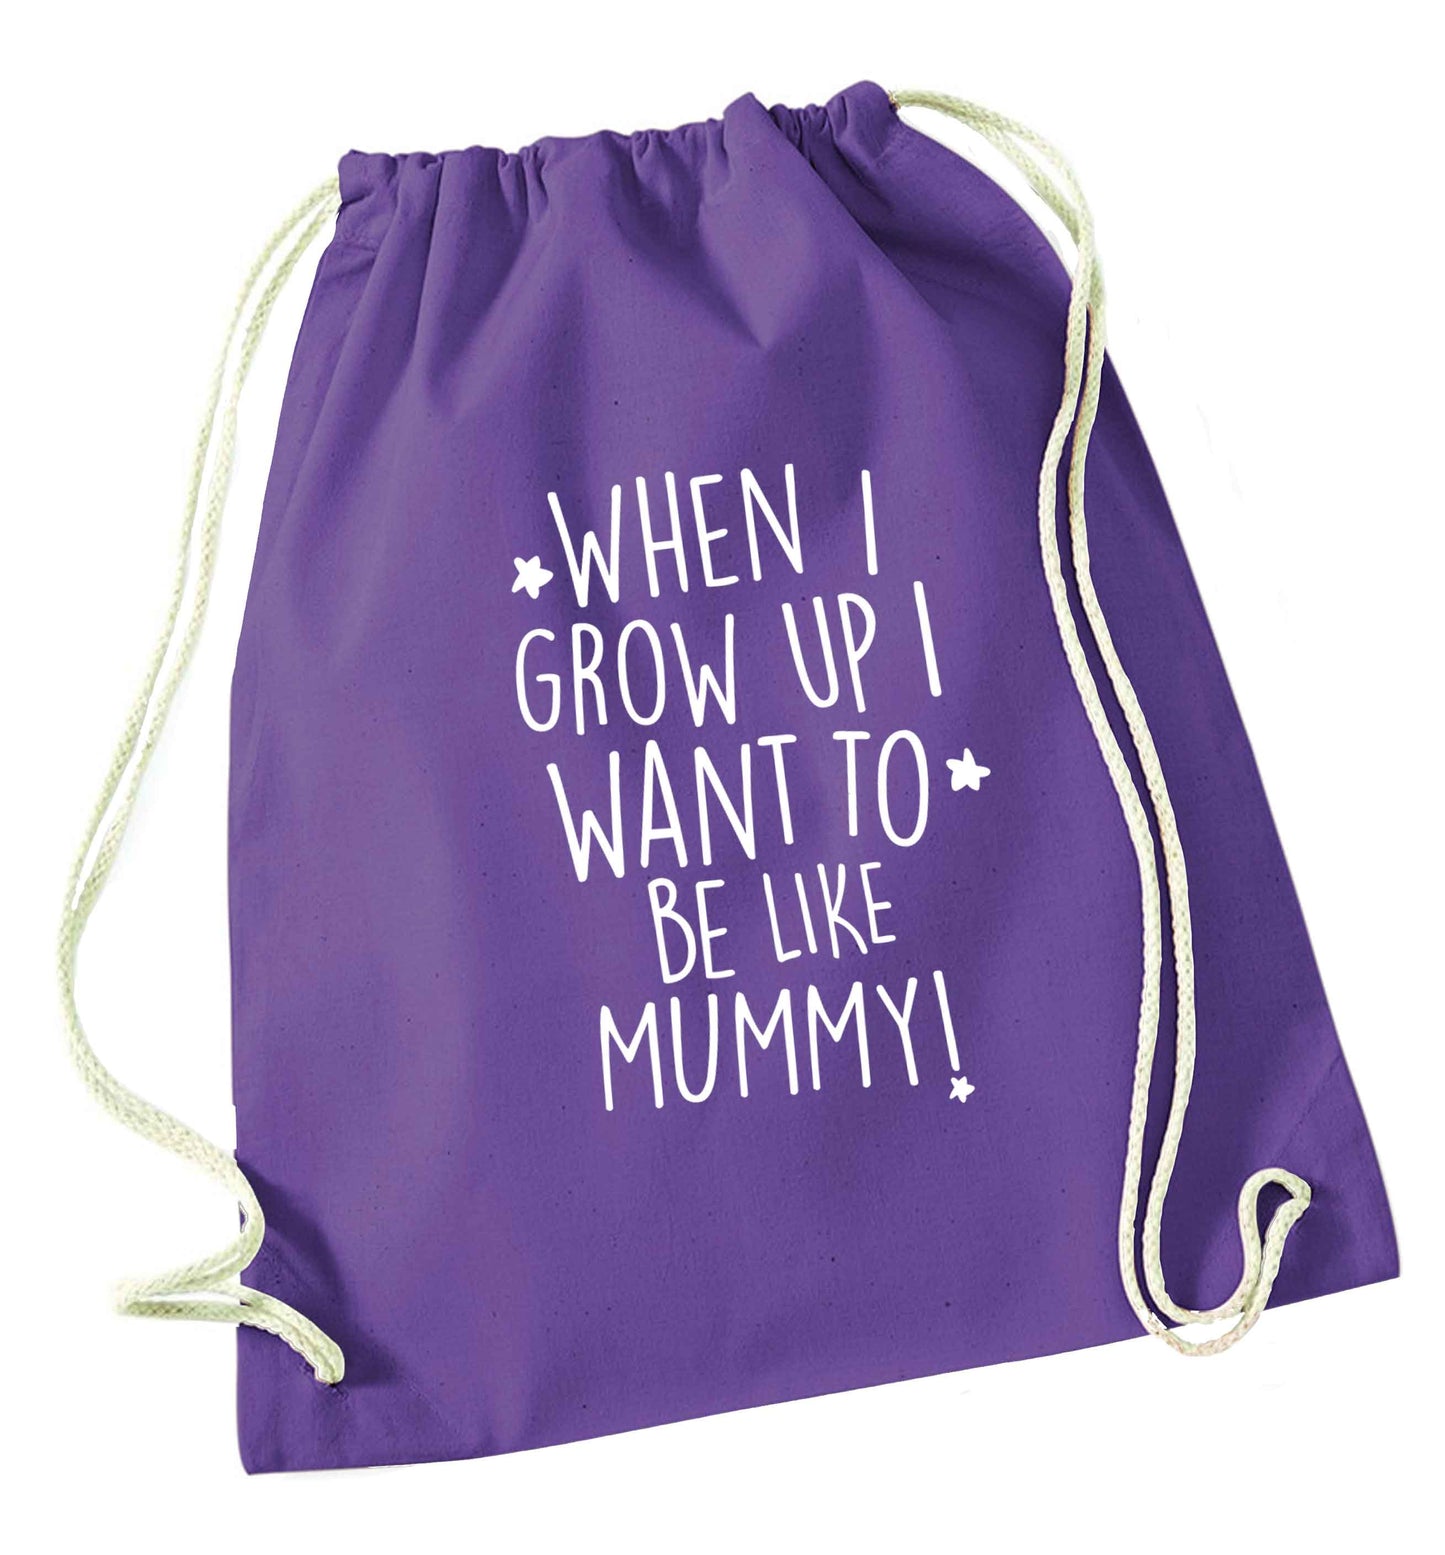 When I grow up I want to be like my mummy purple drawstring bag